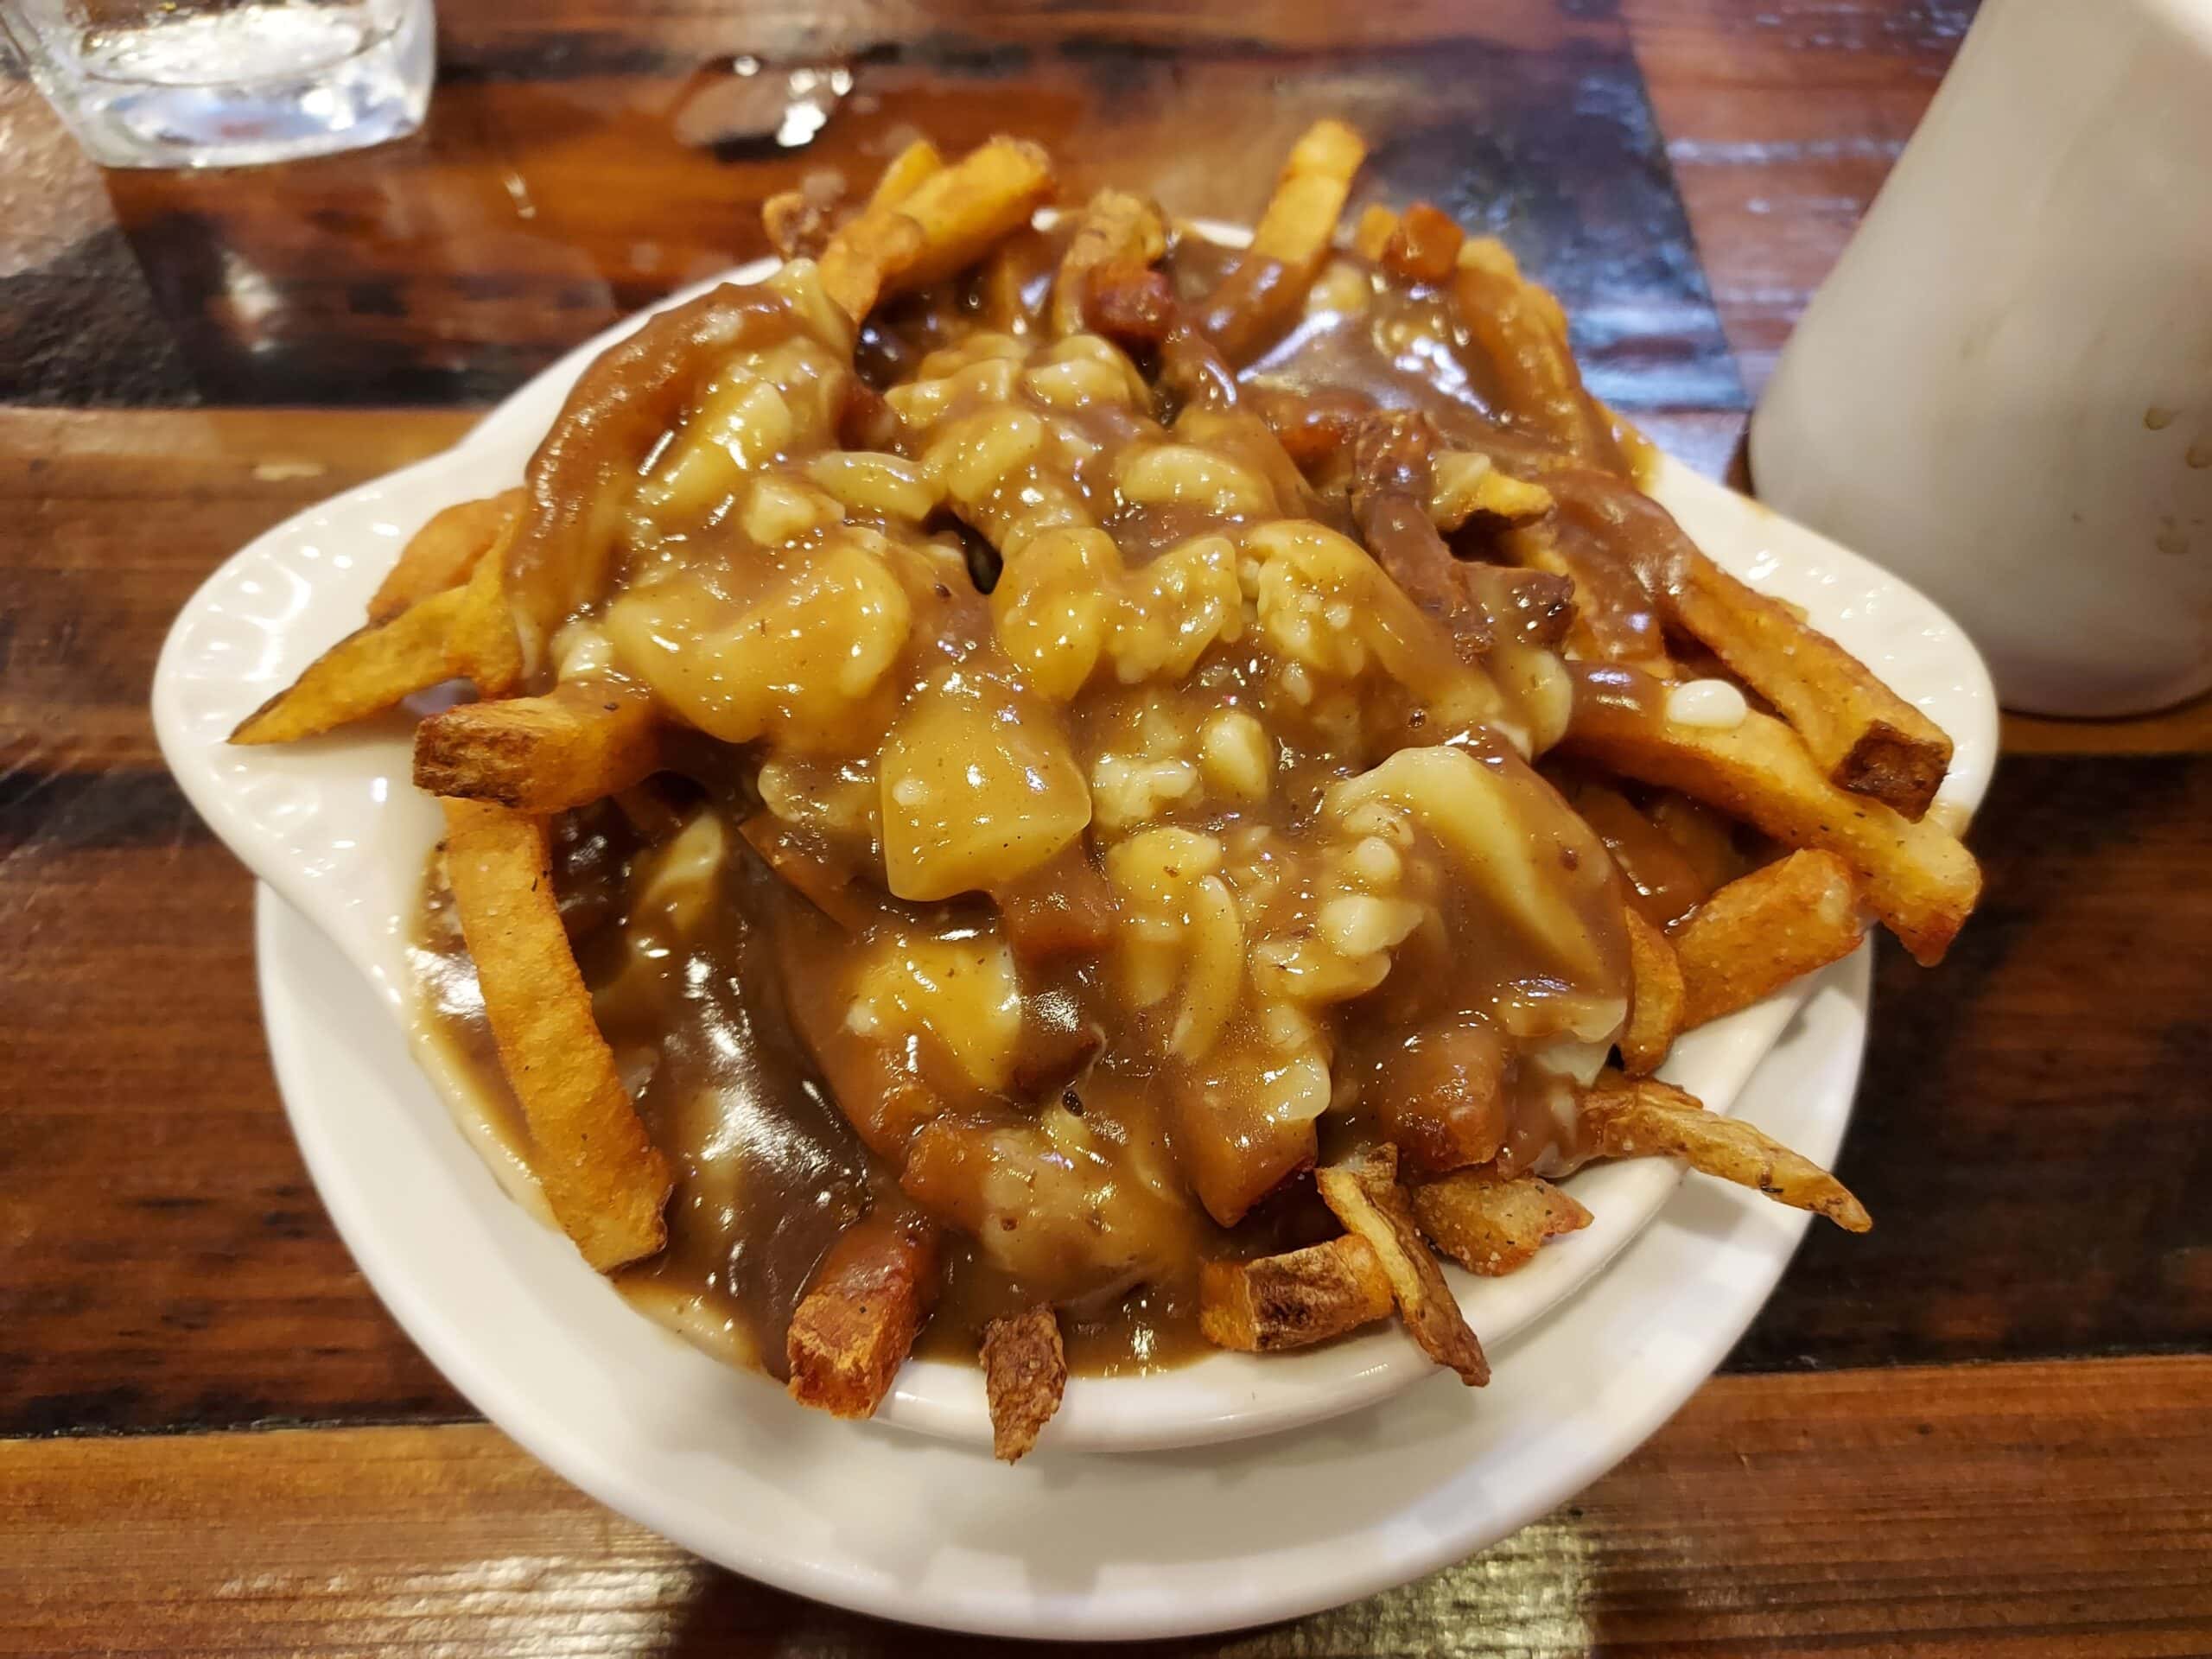 Maple Leaf Diner offers Taste of Canada